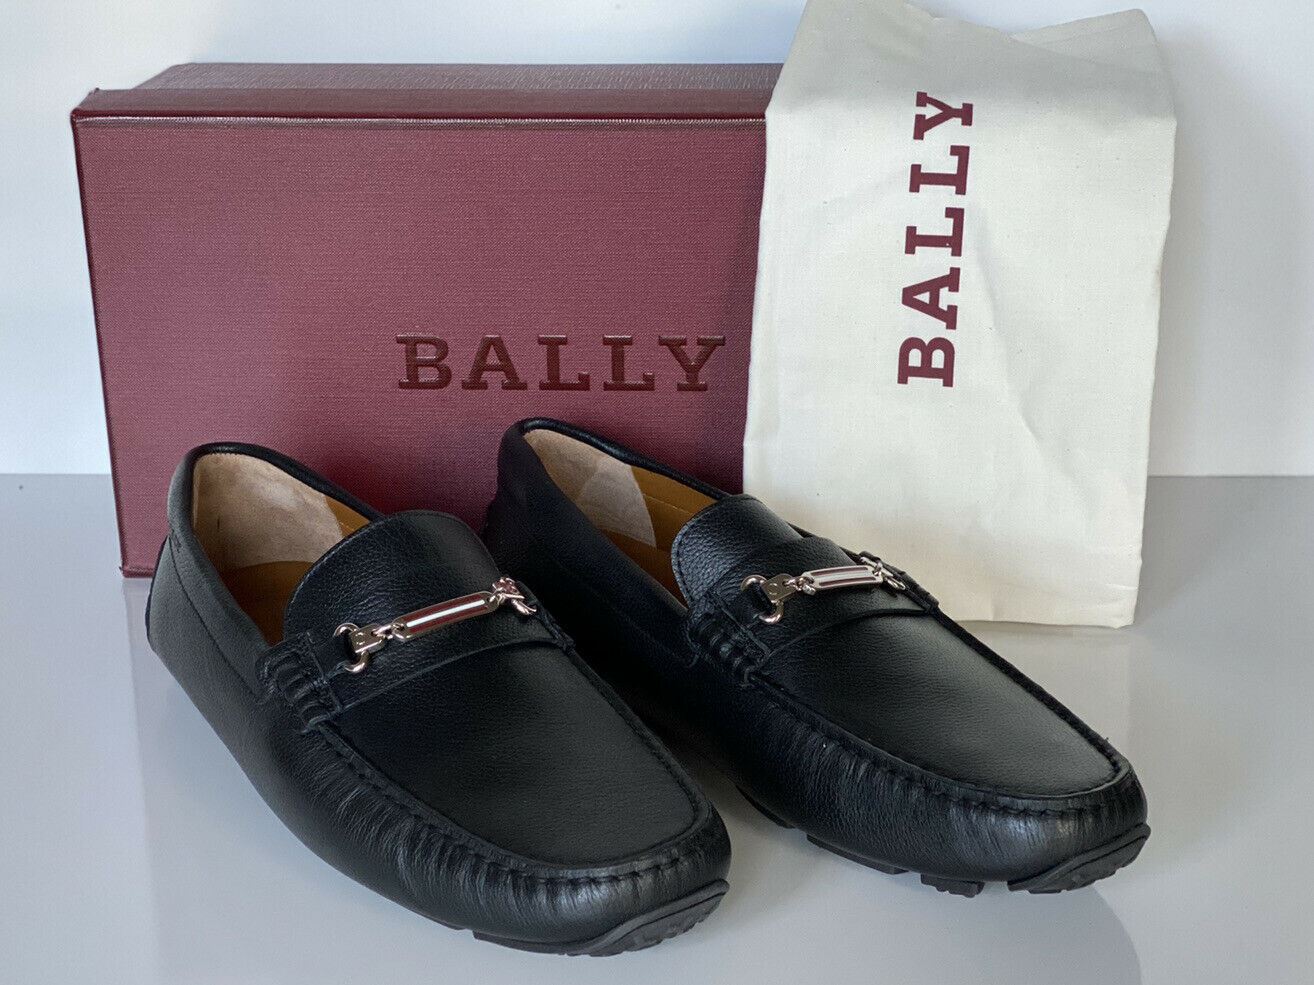 NIB $510 Bally Pitaval Mens Bovine Leather Driver Shoes Black 10 D US 6227955 IT